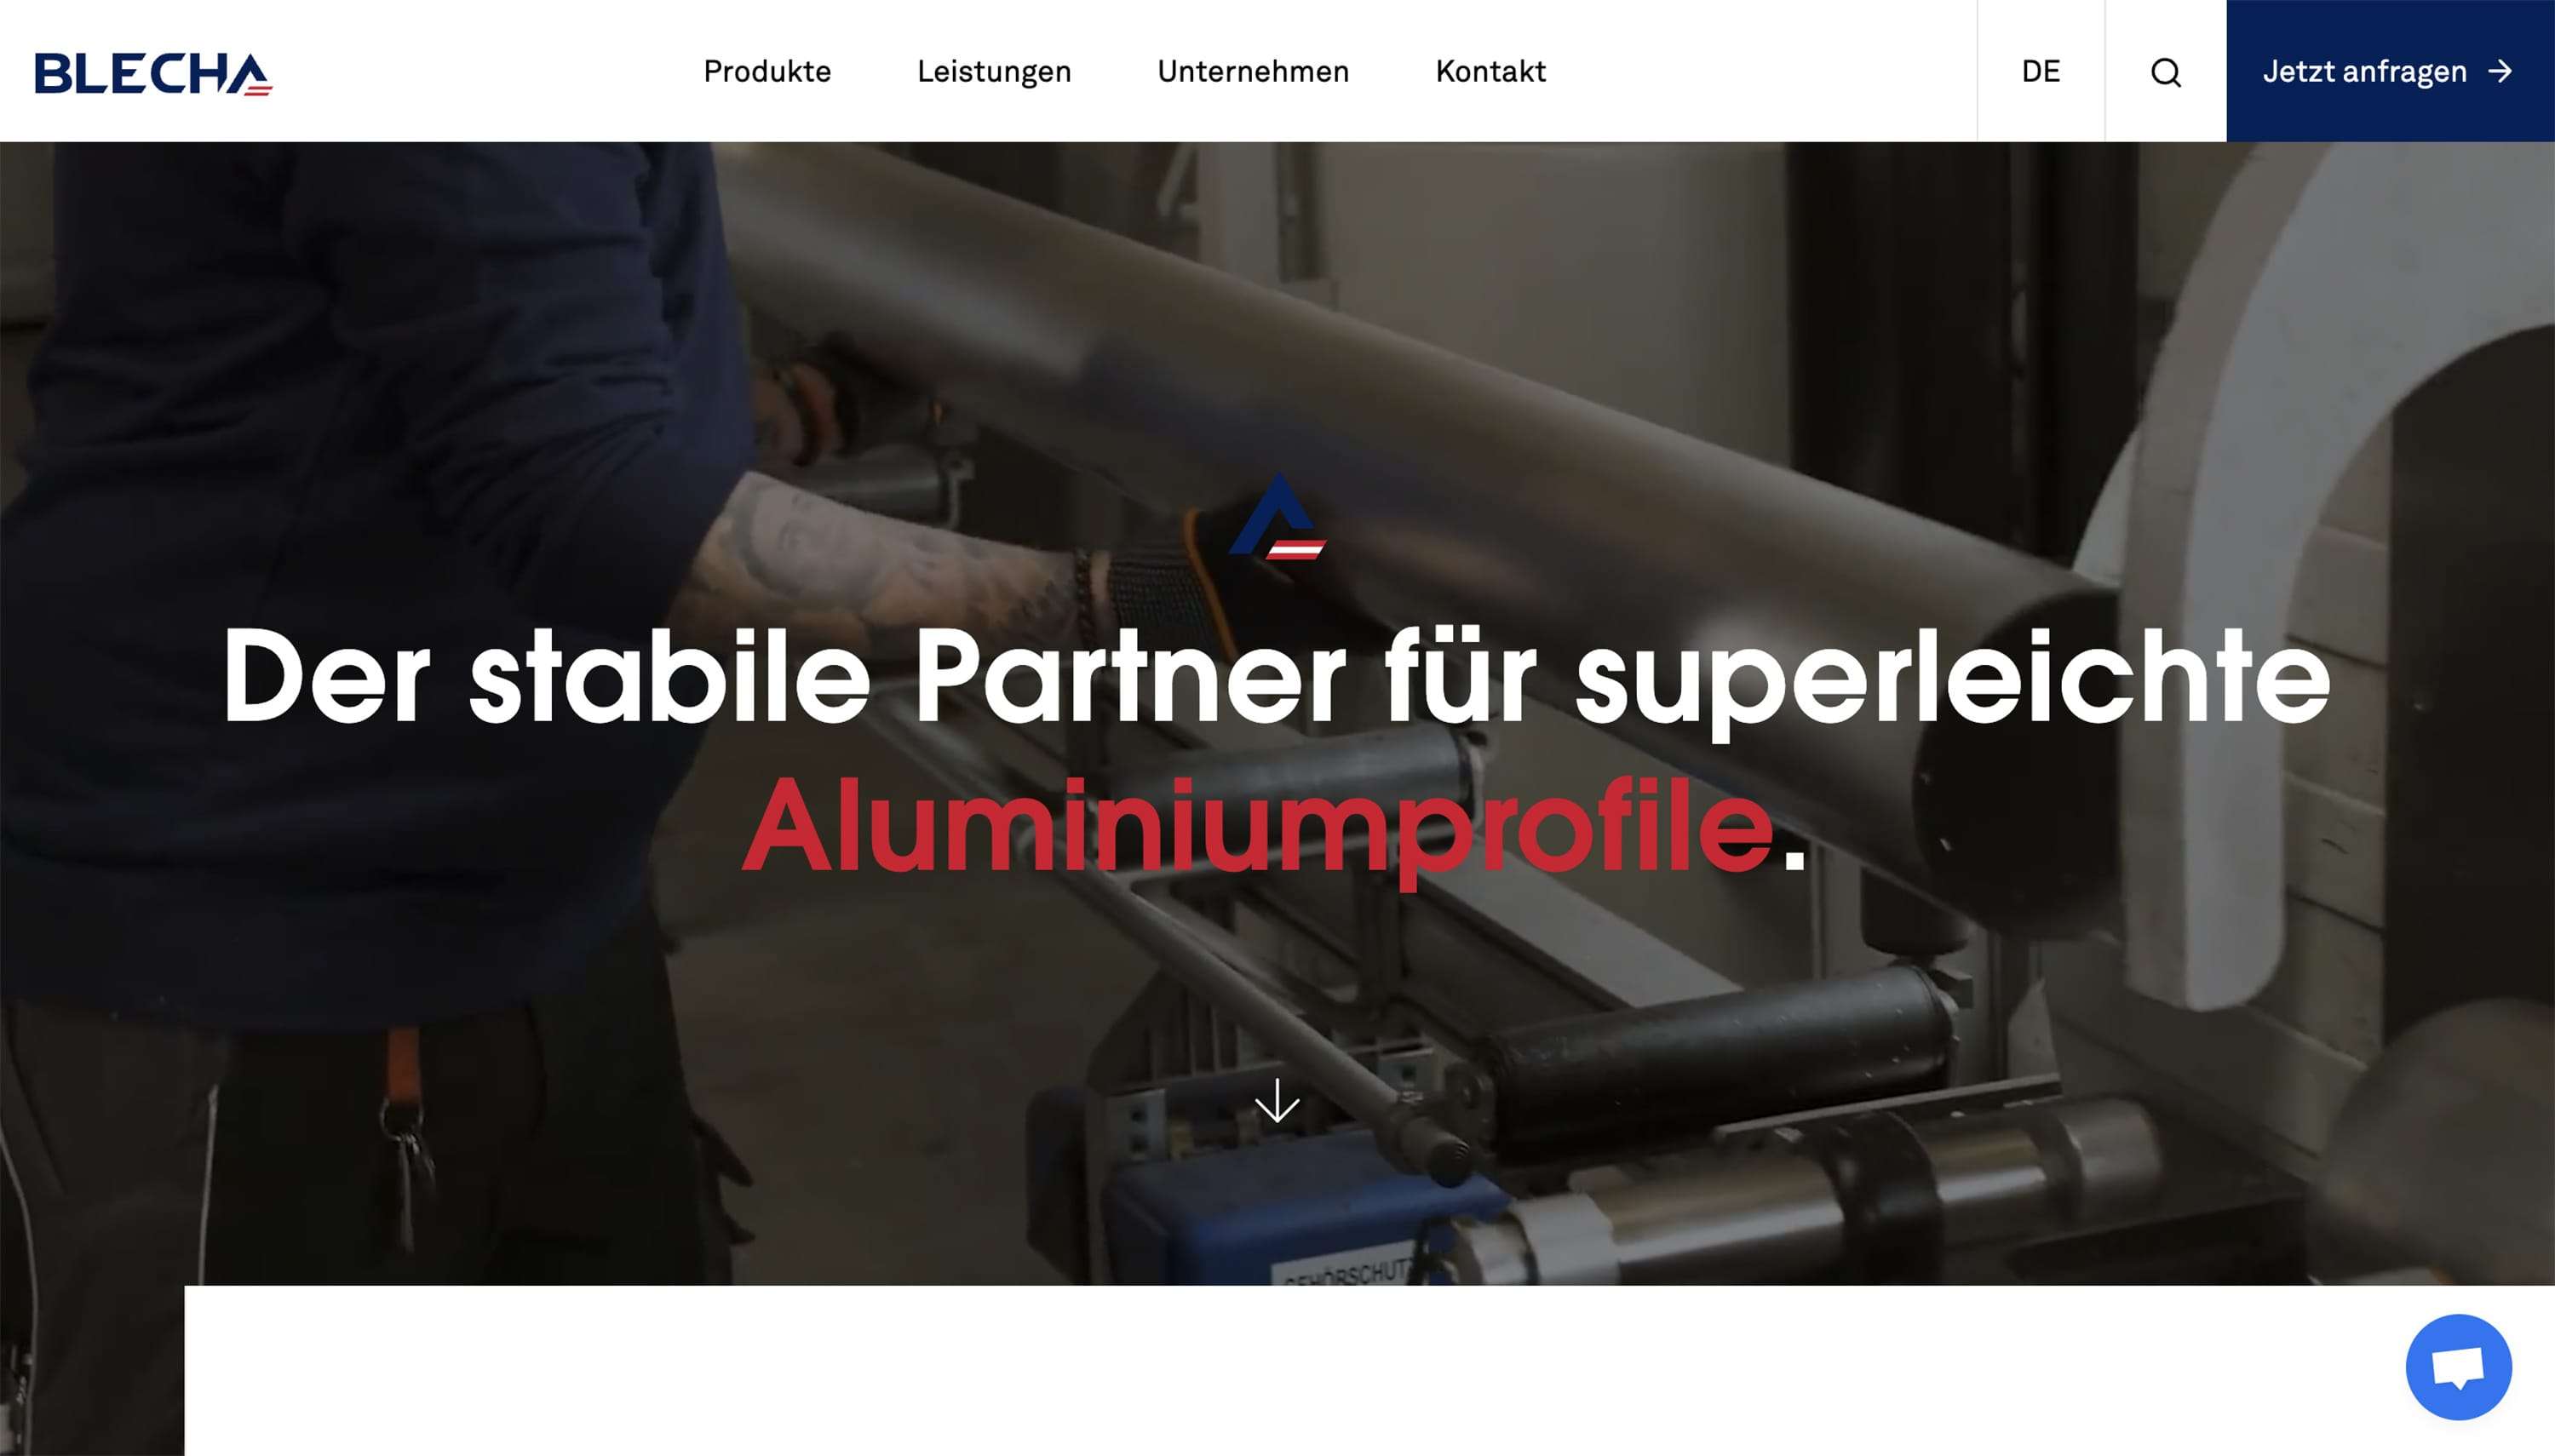 The stable partner for super-light aluminum profiles.